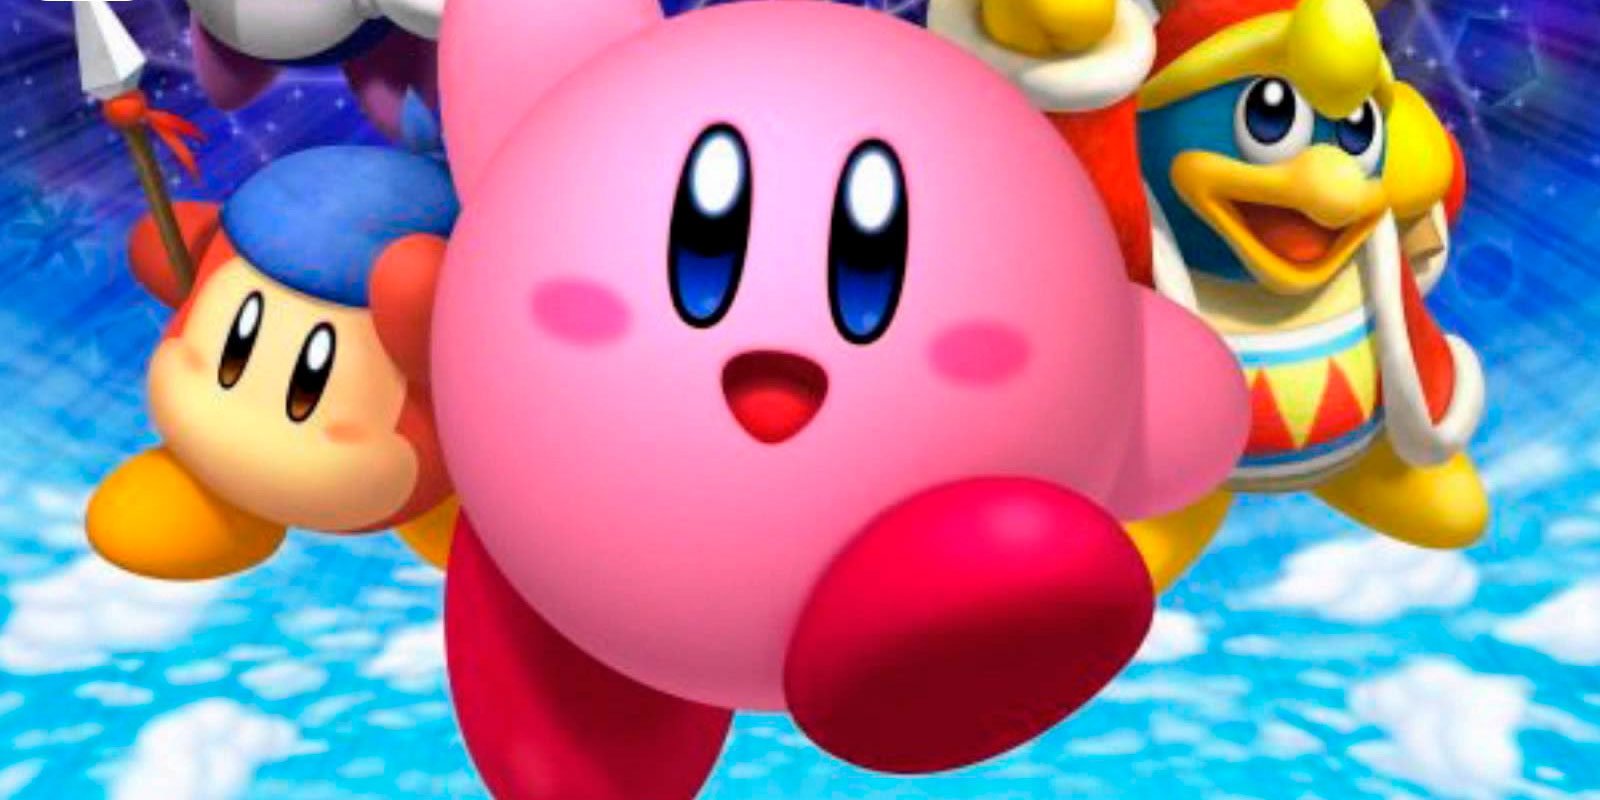 Is Kirby a God?